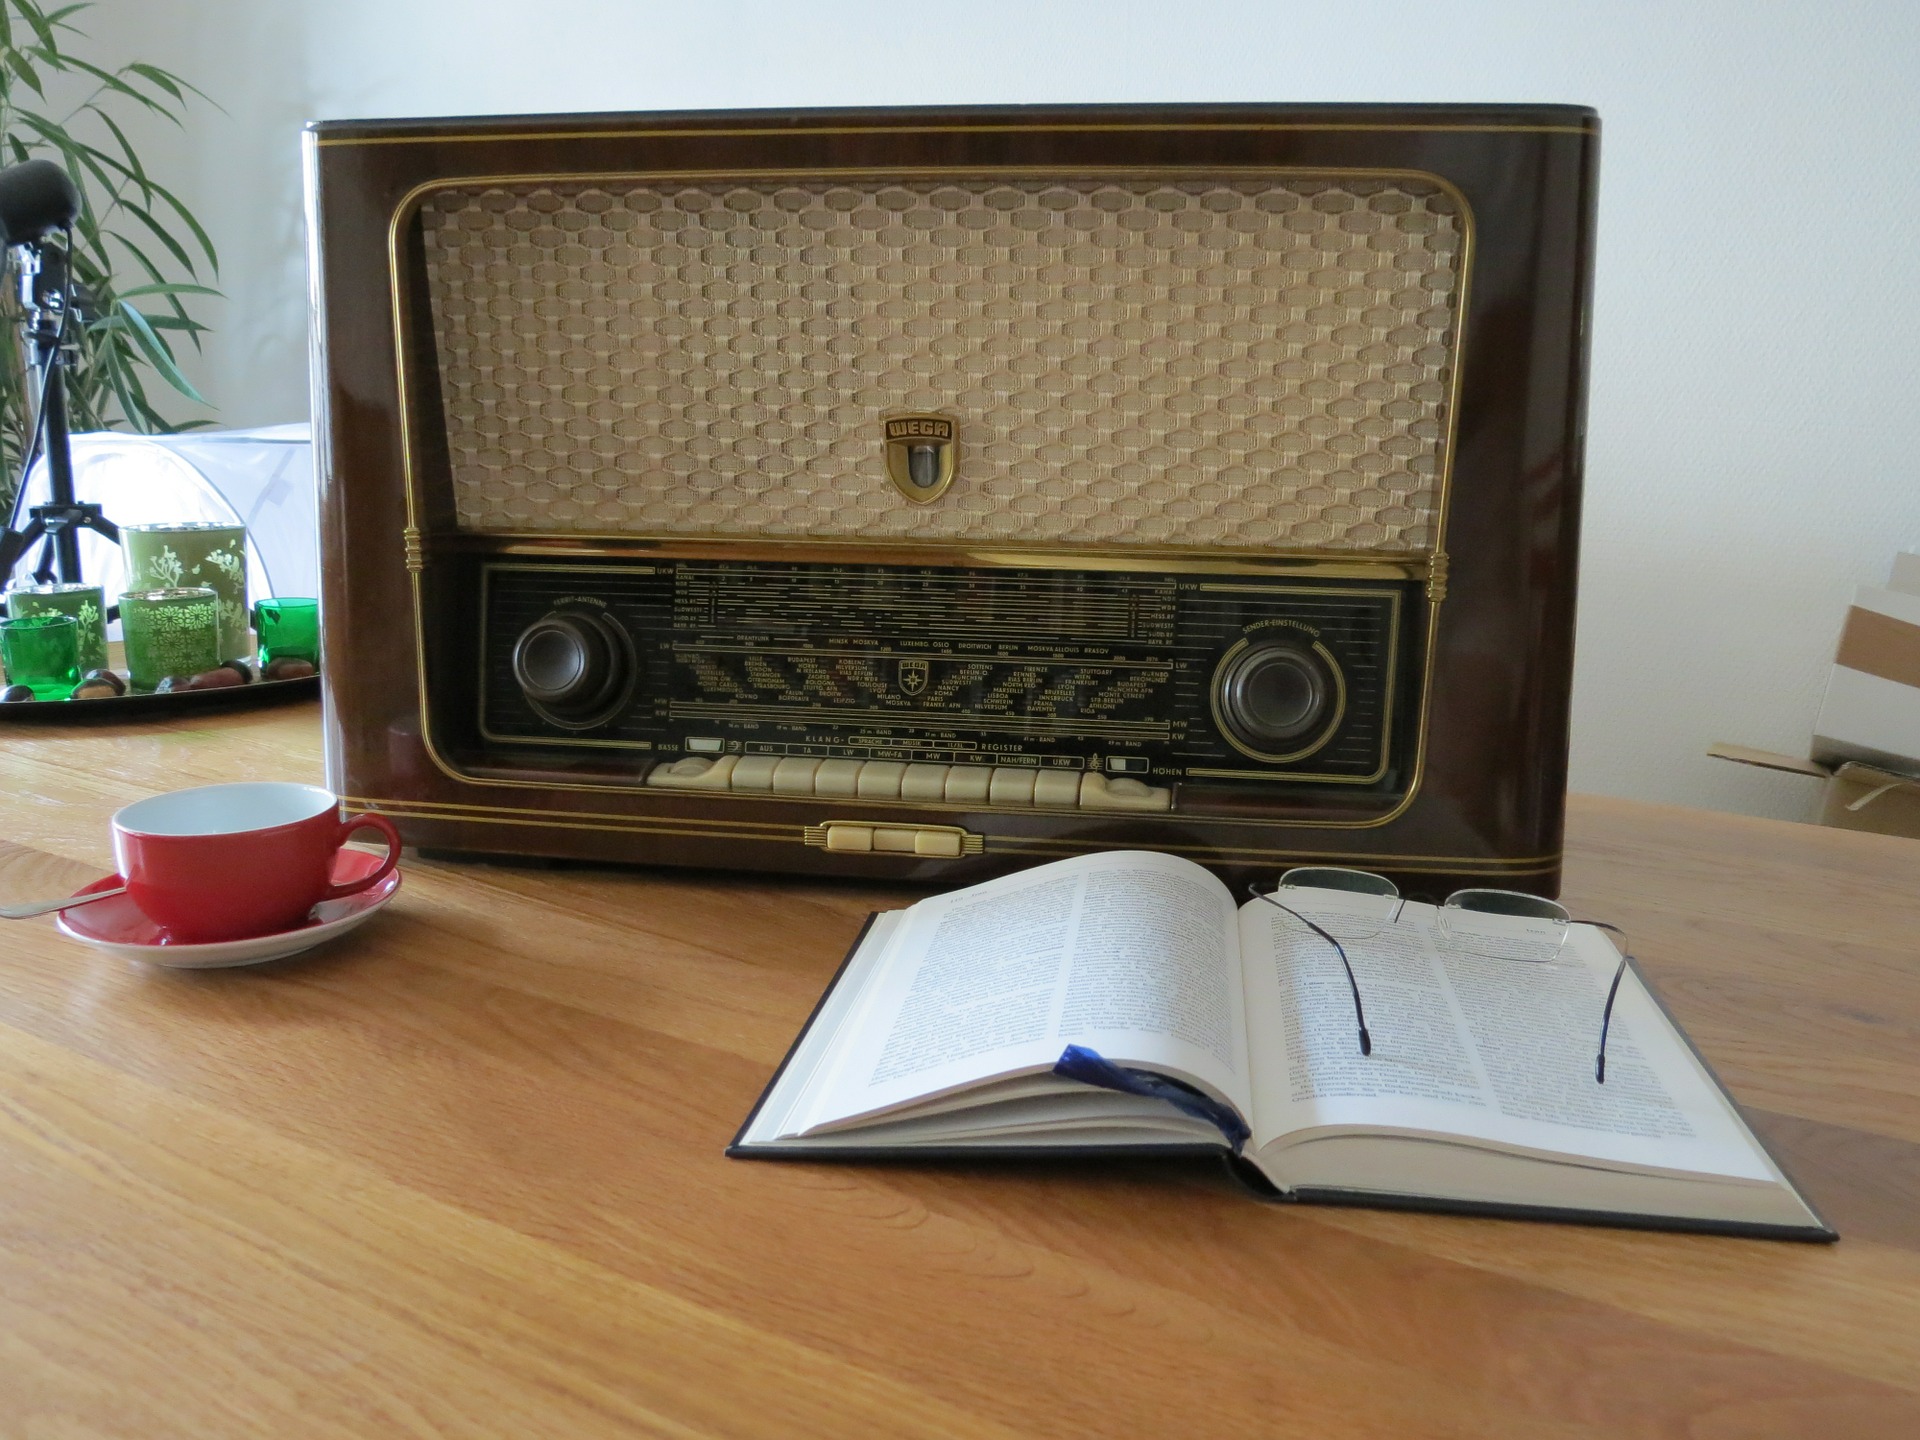 radio (c) www.pixabay.com